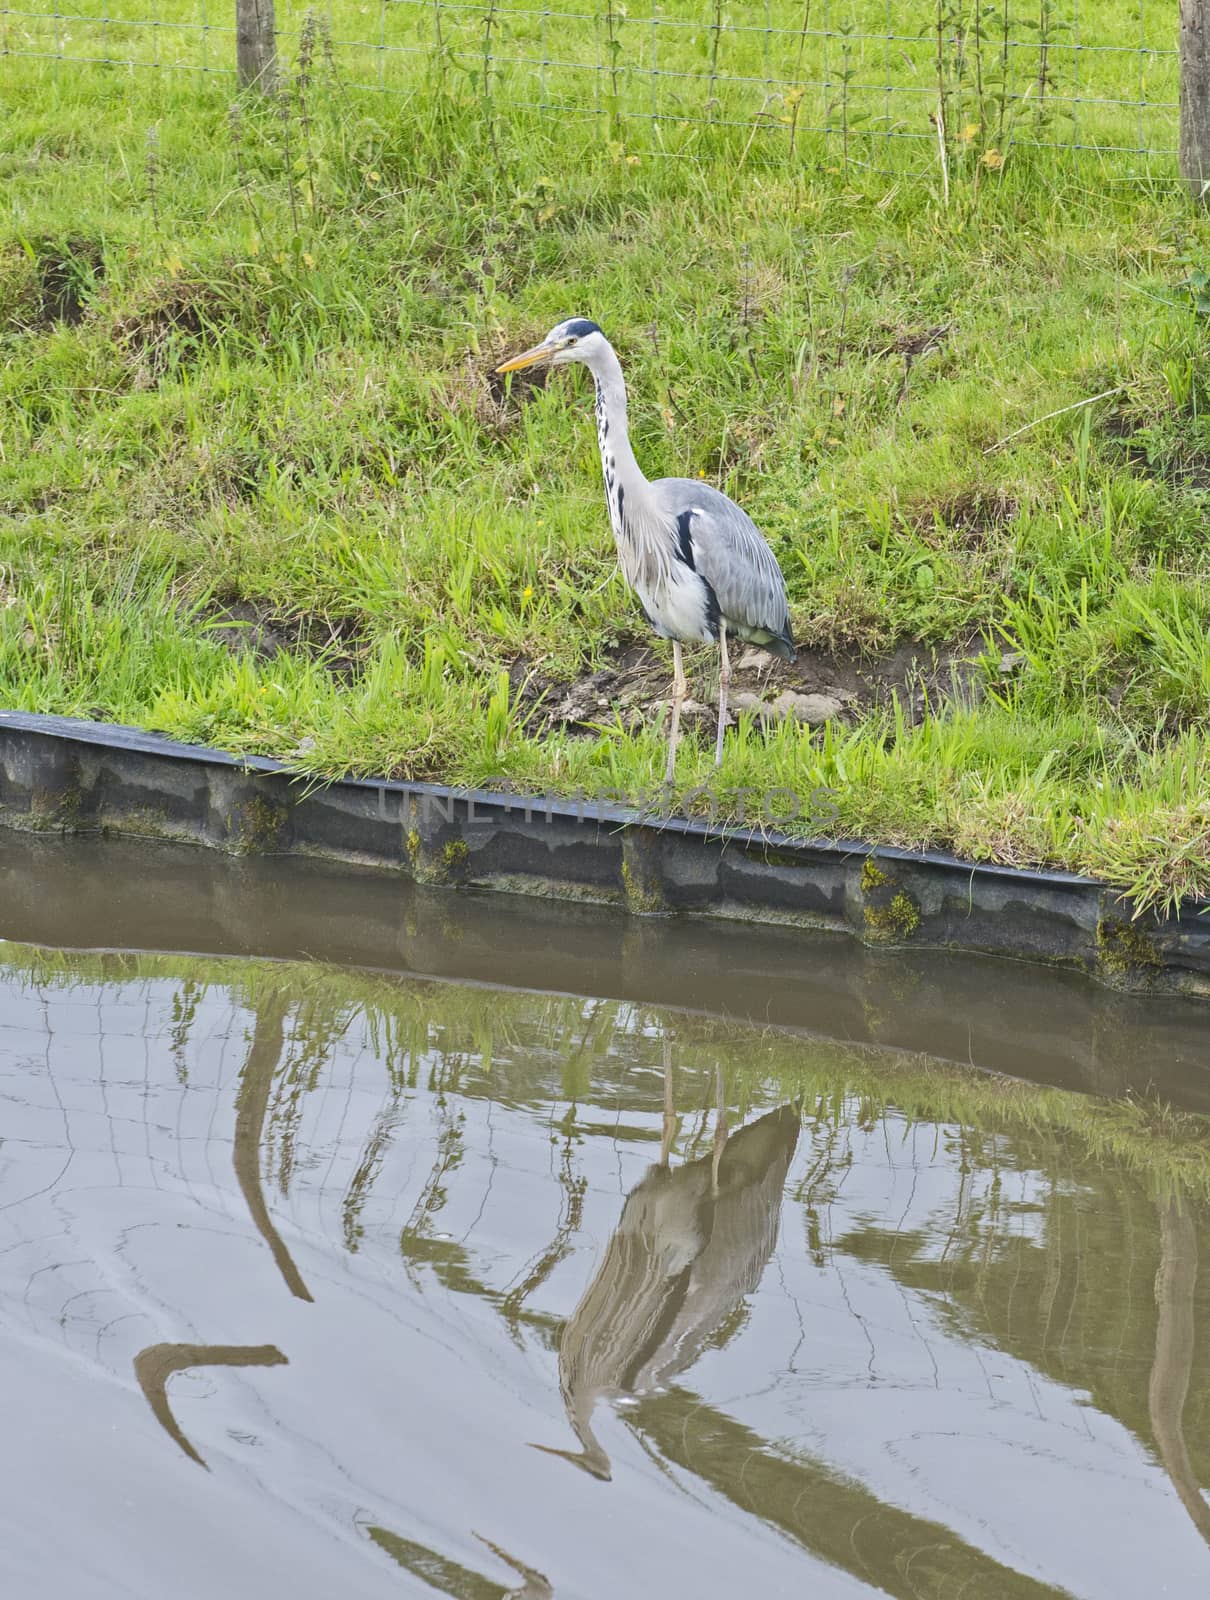 Grey heron ardea cinera stood on bank of canal in rural river scene